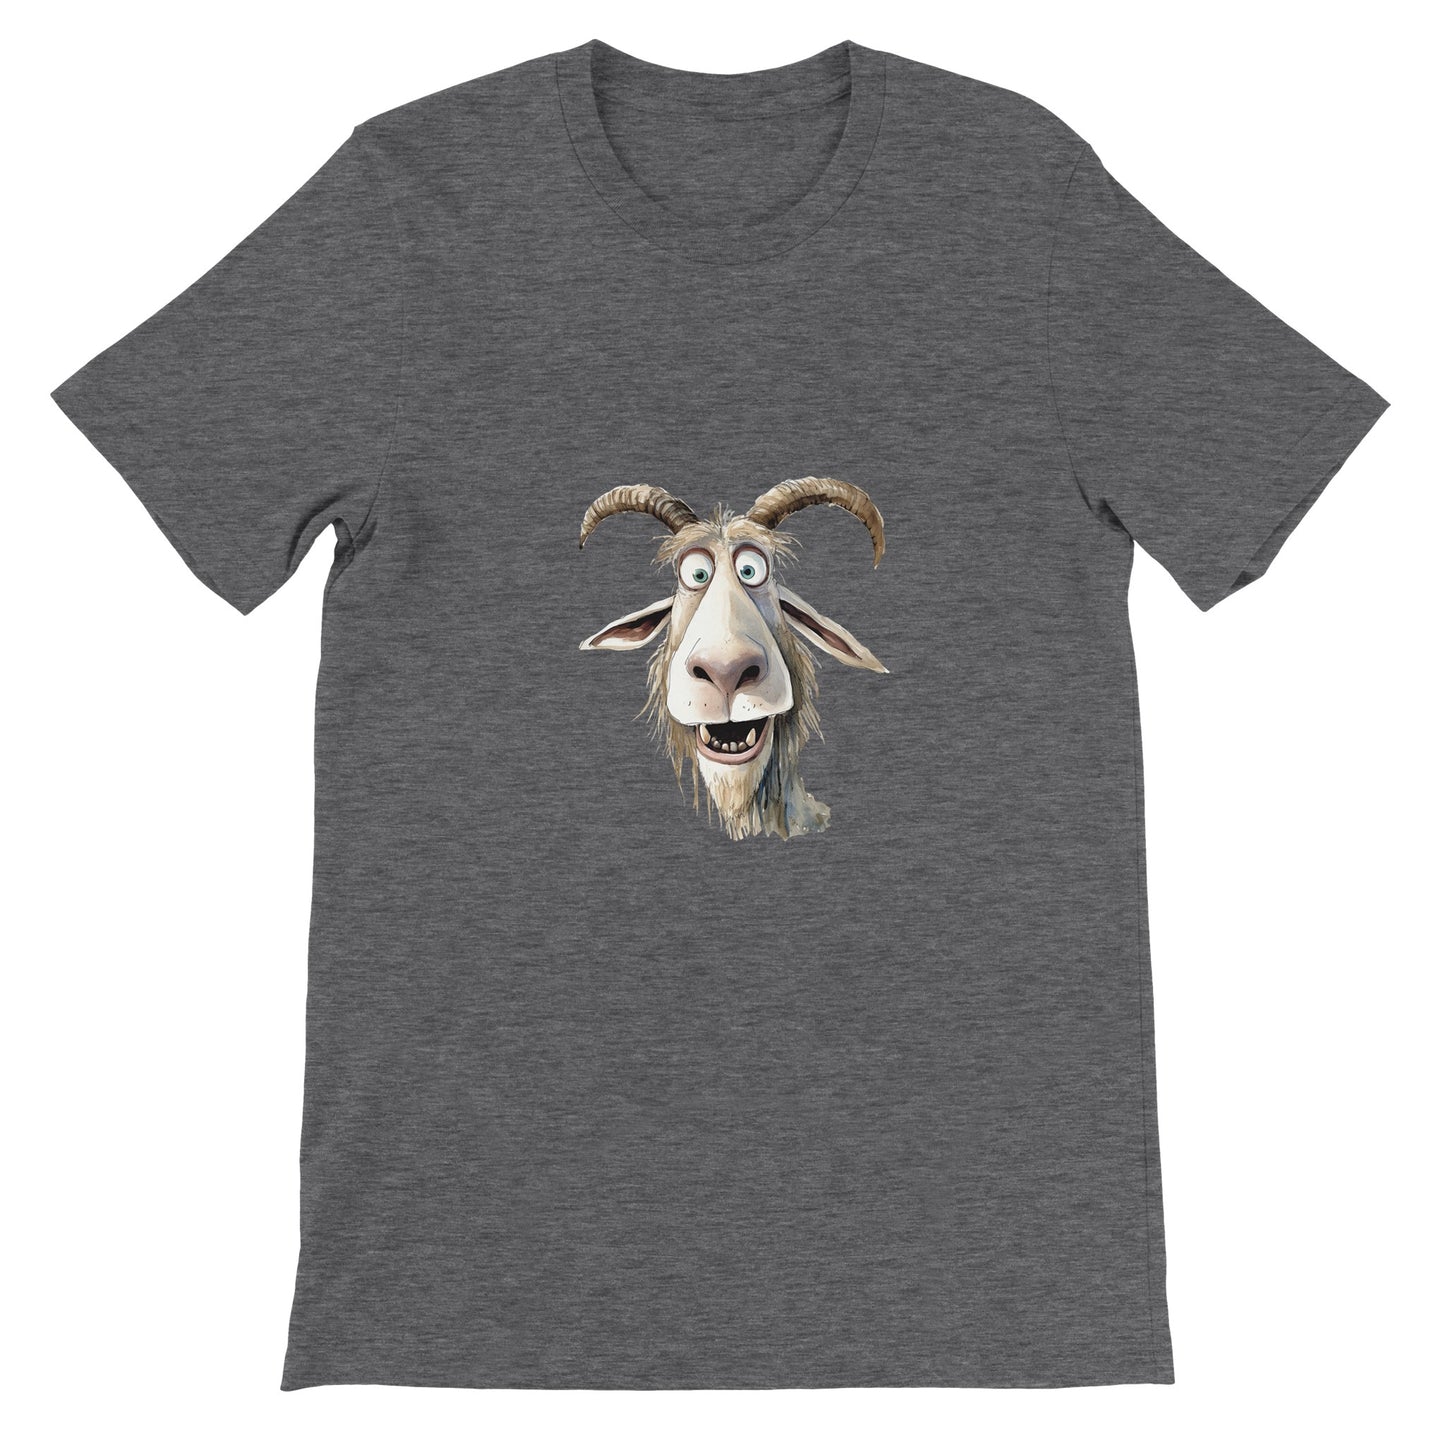 Budget Unisex Crewneck T-shirt/Funny-Goat